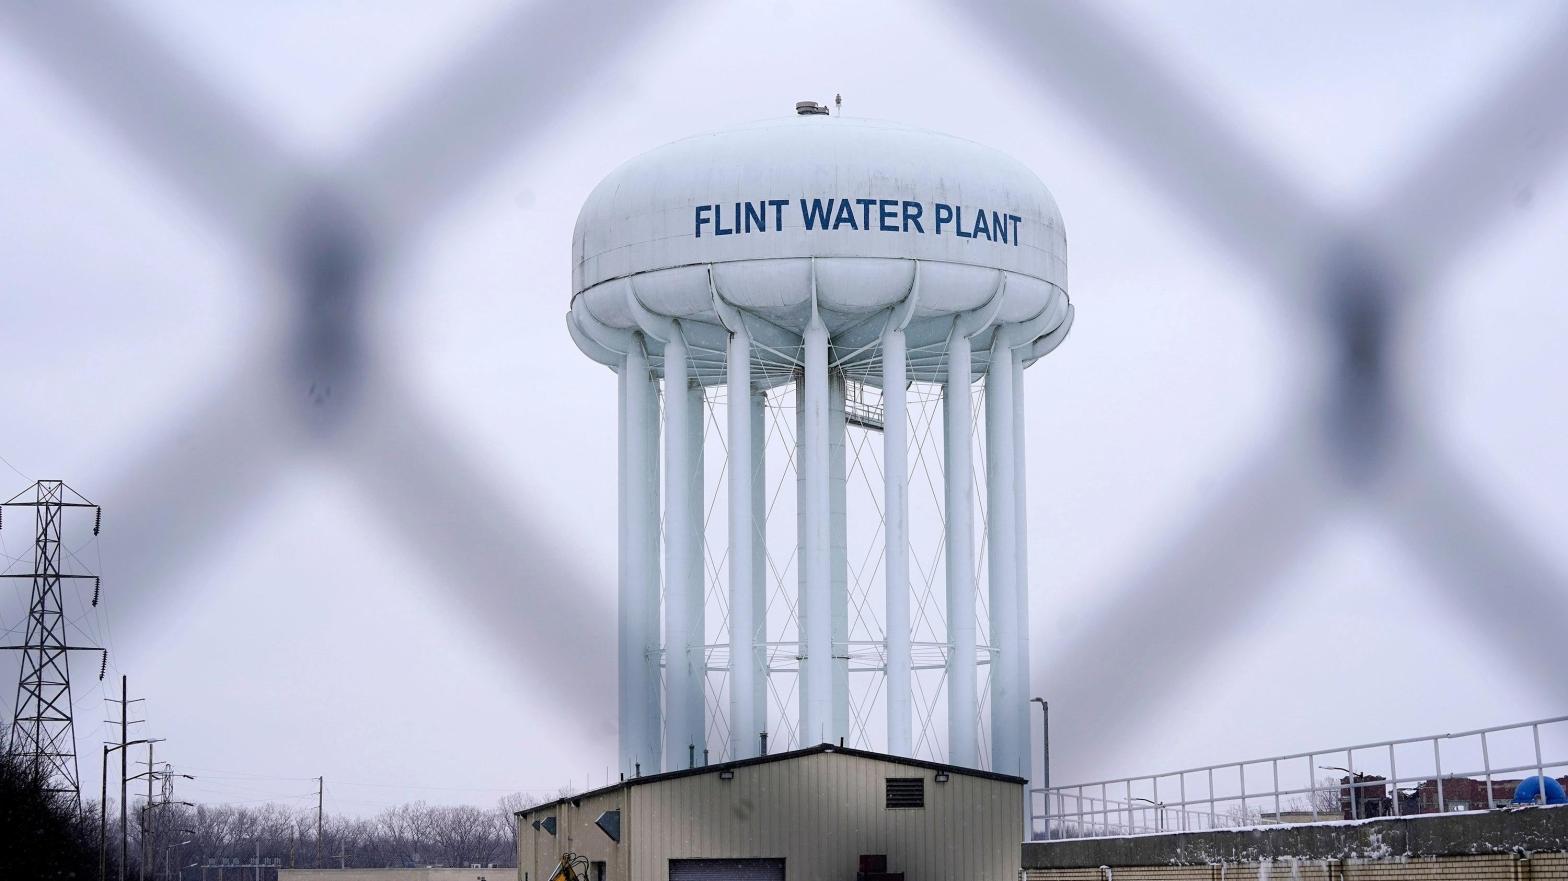 The Flint water plant tower in Flint, Michigan. (Photo: Carlos Osorio, AP)